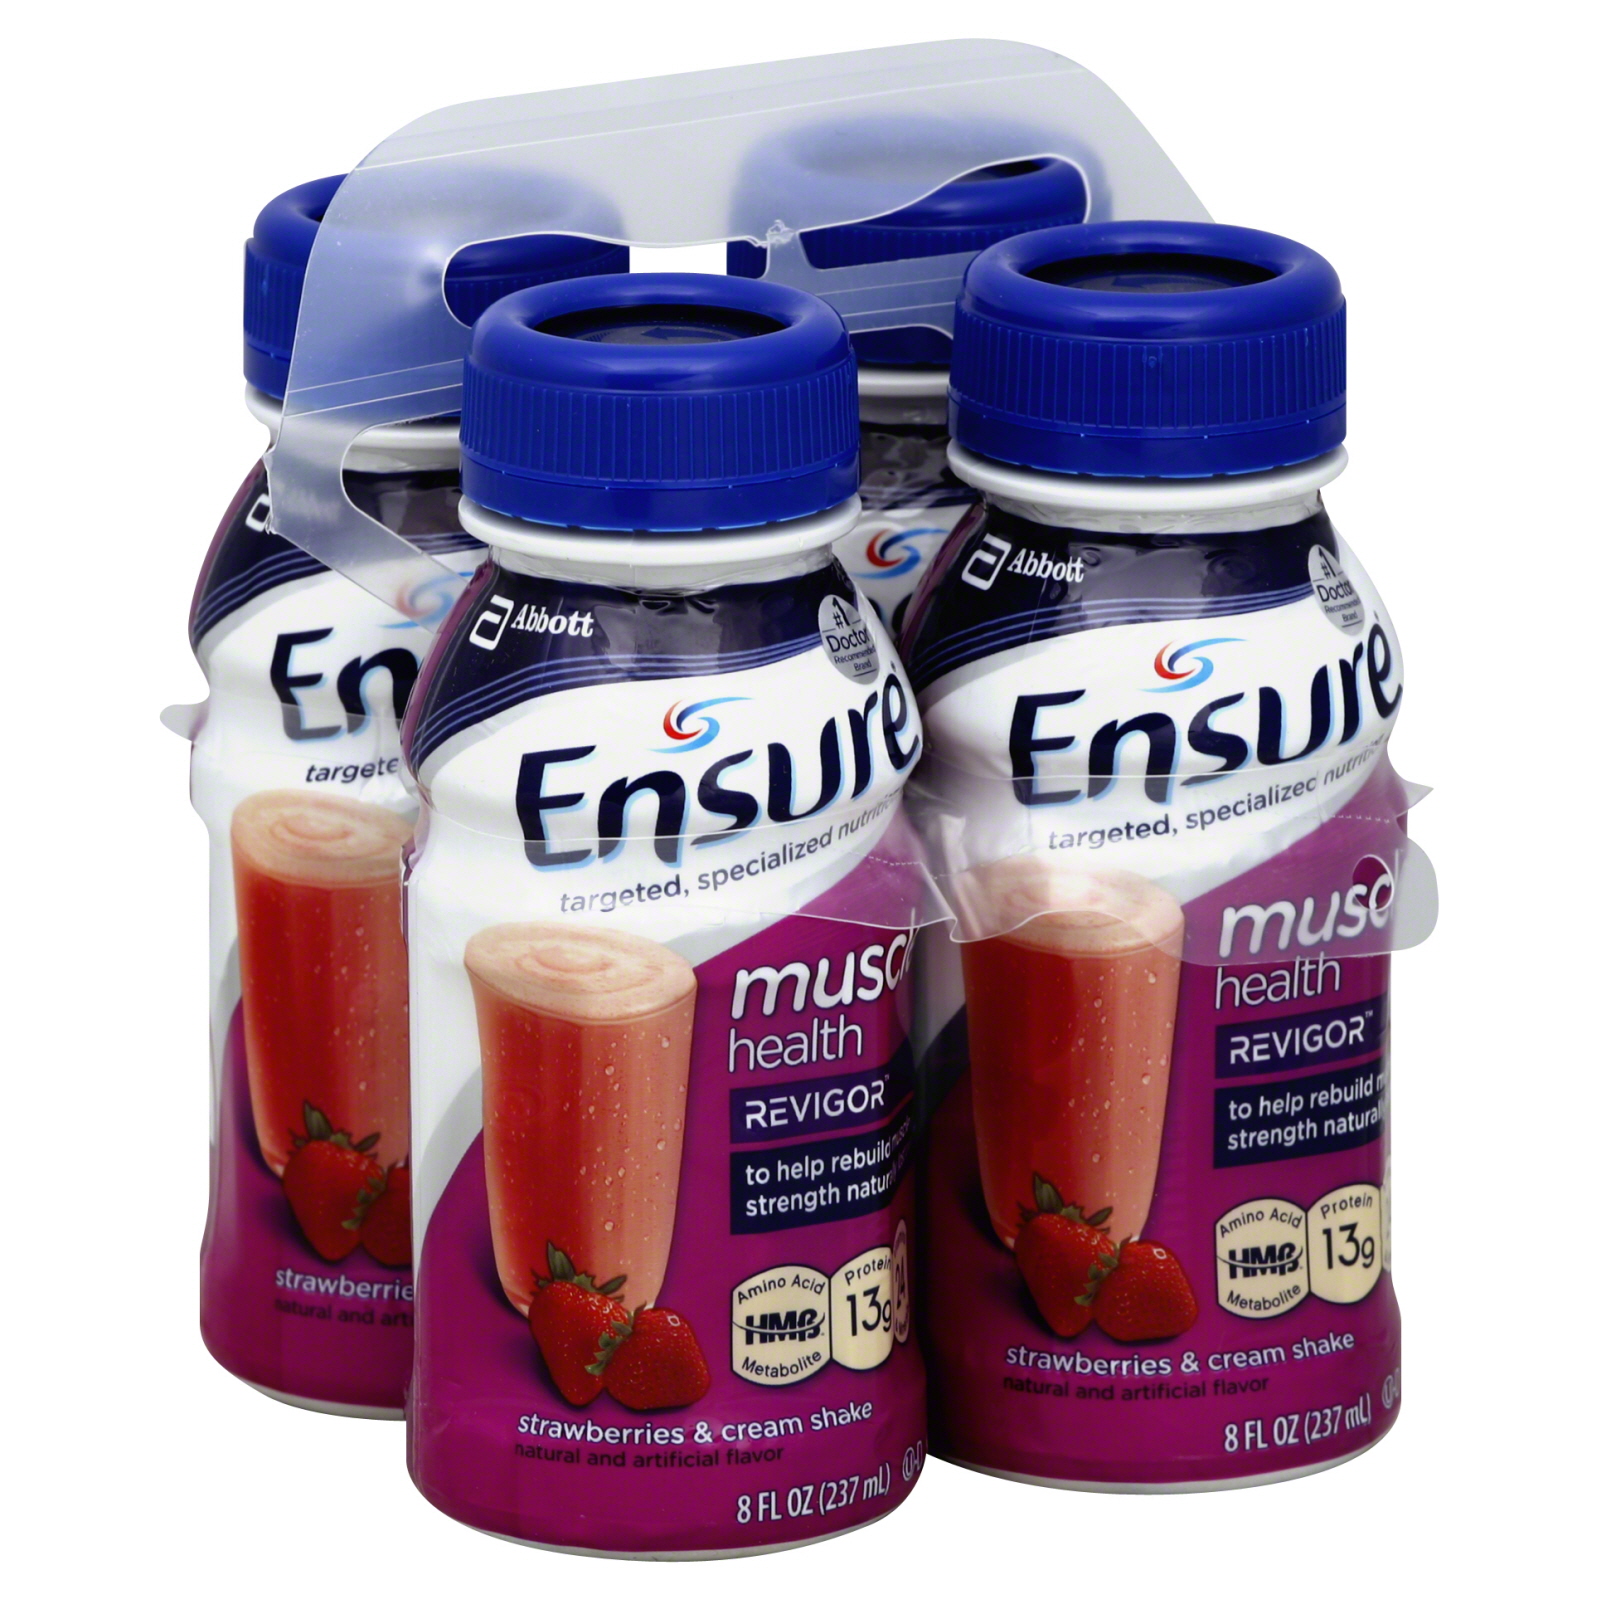 Ensure Shake, Strawberries & Cream, Muscle Health, 4 - 8 fl oz (237 ml) bottles